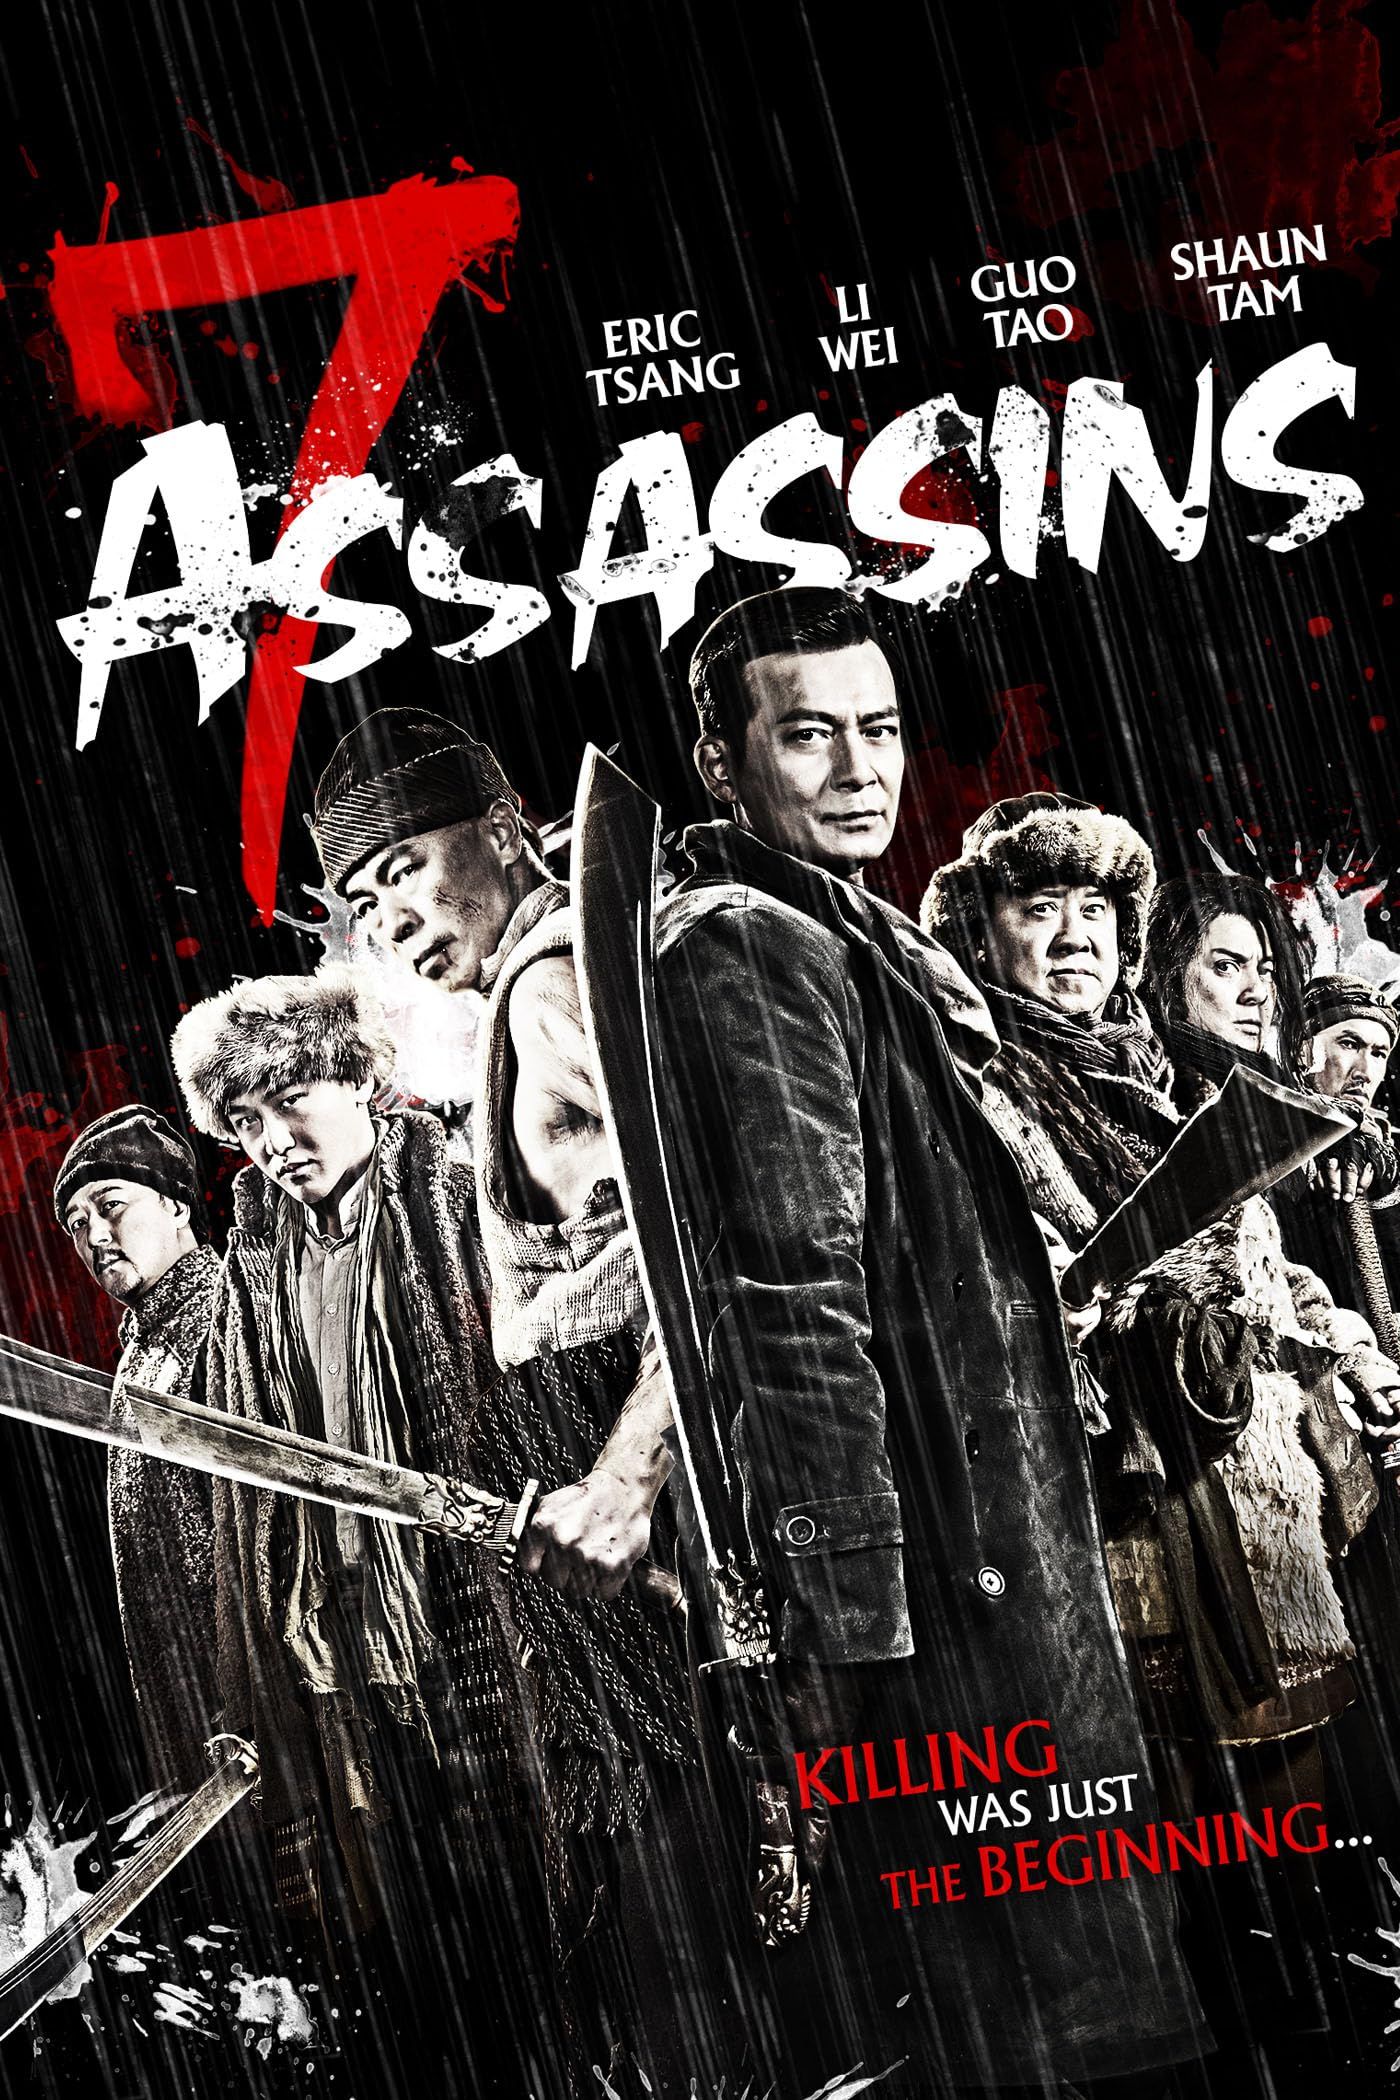 7 Assassins (2013) Hindi Dubbed Movie download full movie